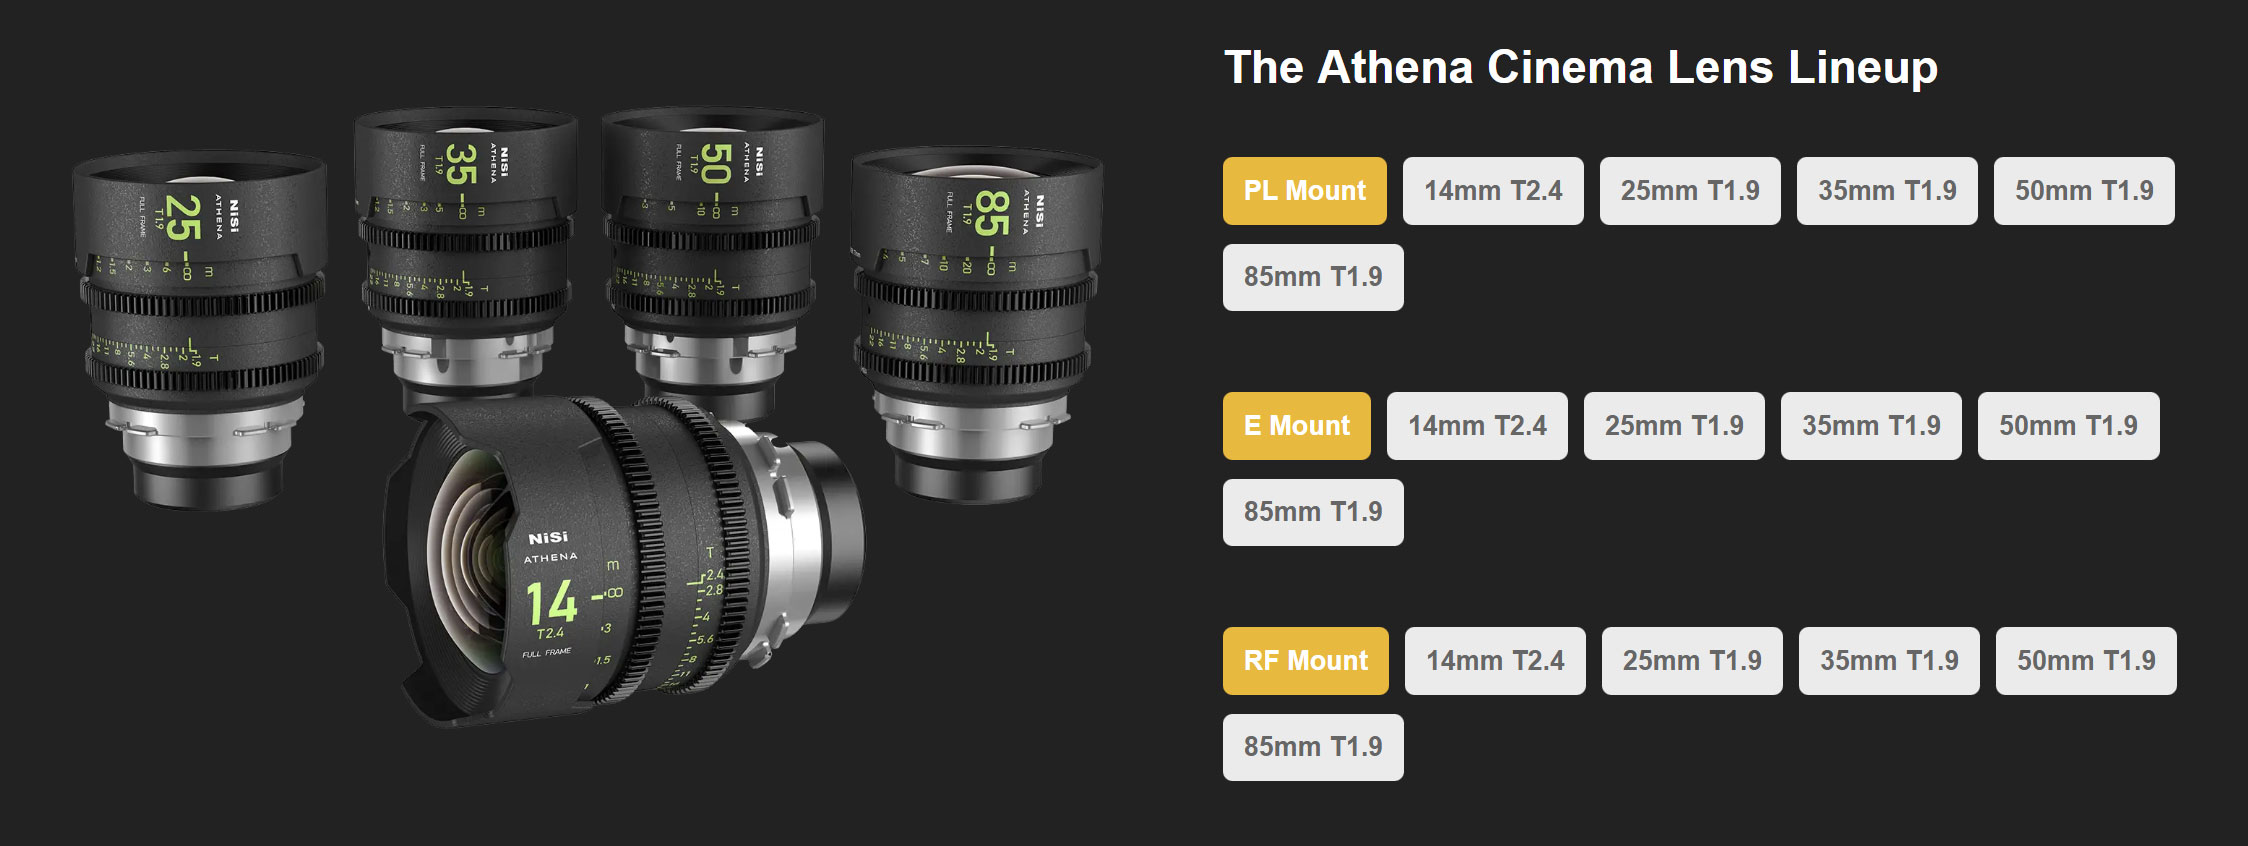 NiSi Athena Prime cinema lenses on pre-order now